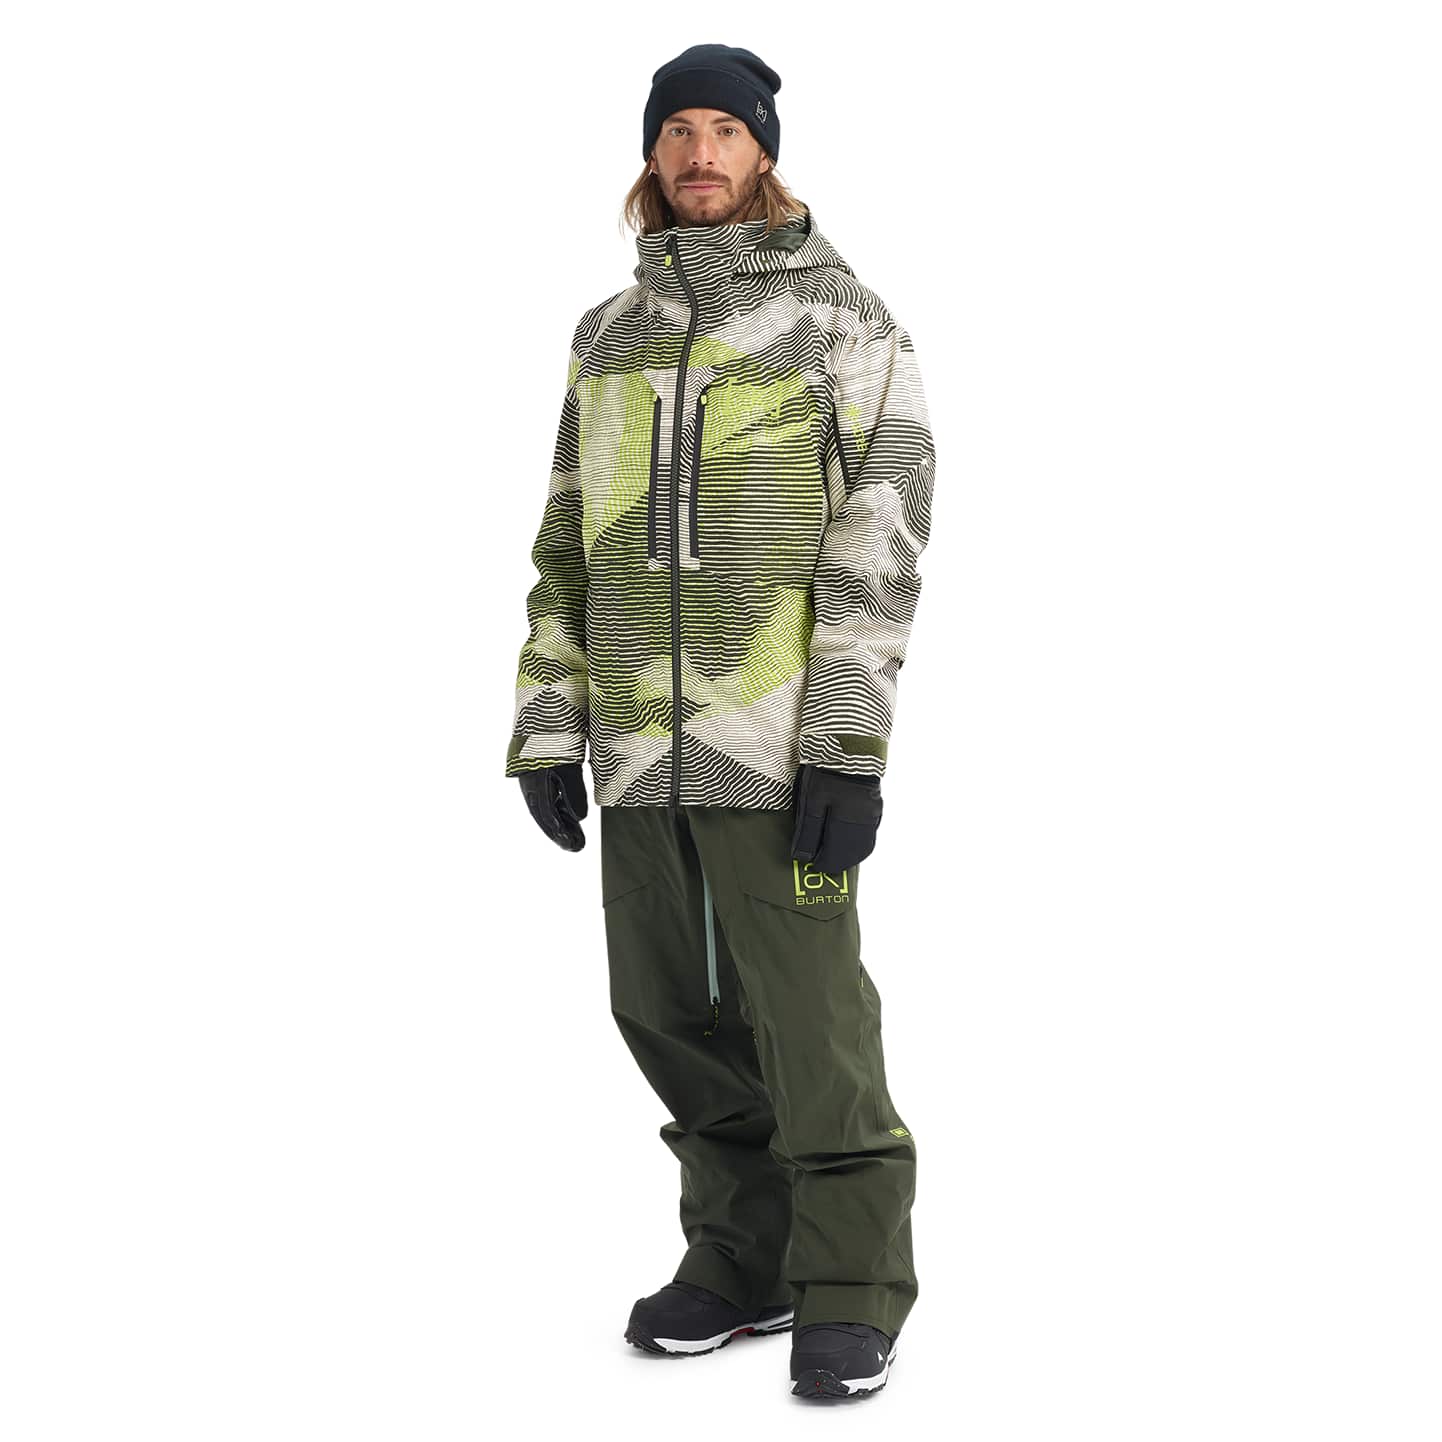 Burton AK Swash GORE-TEX 2L Pants サイズXL ウエア/装備(男性用) スノーボード スポーツ・レジャー 新品入荷